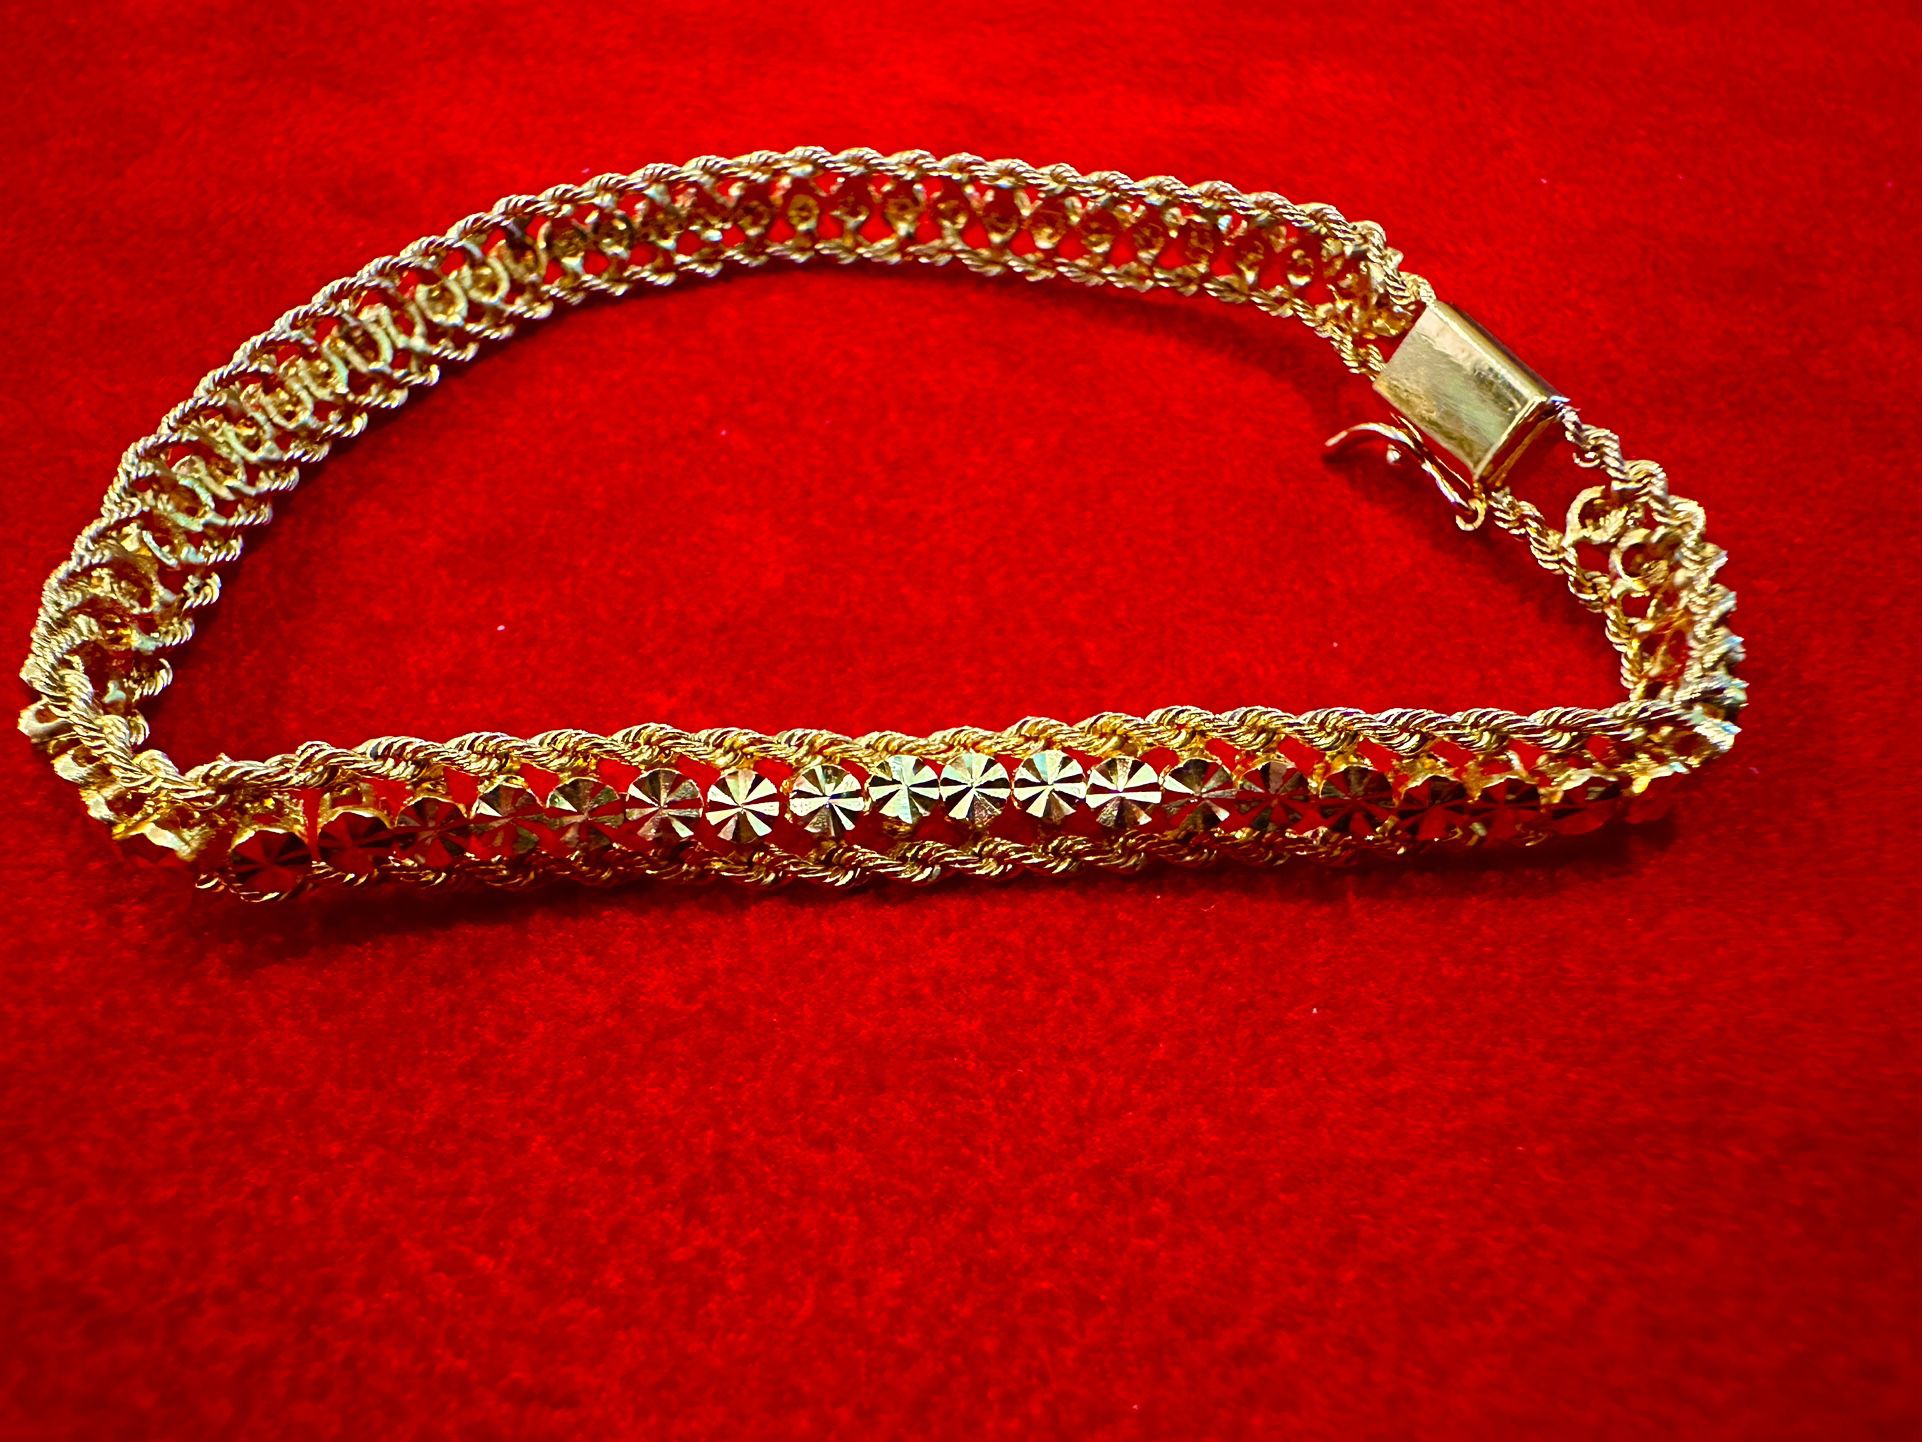 Woman’s 14k Gold Bracelet